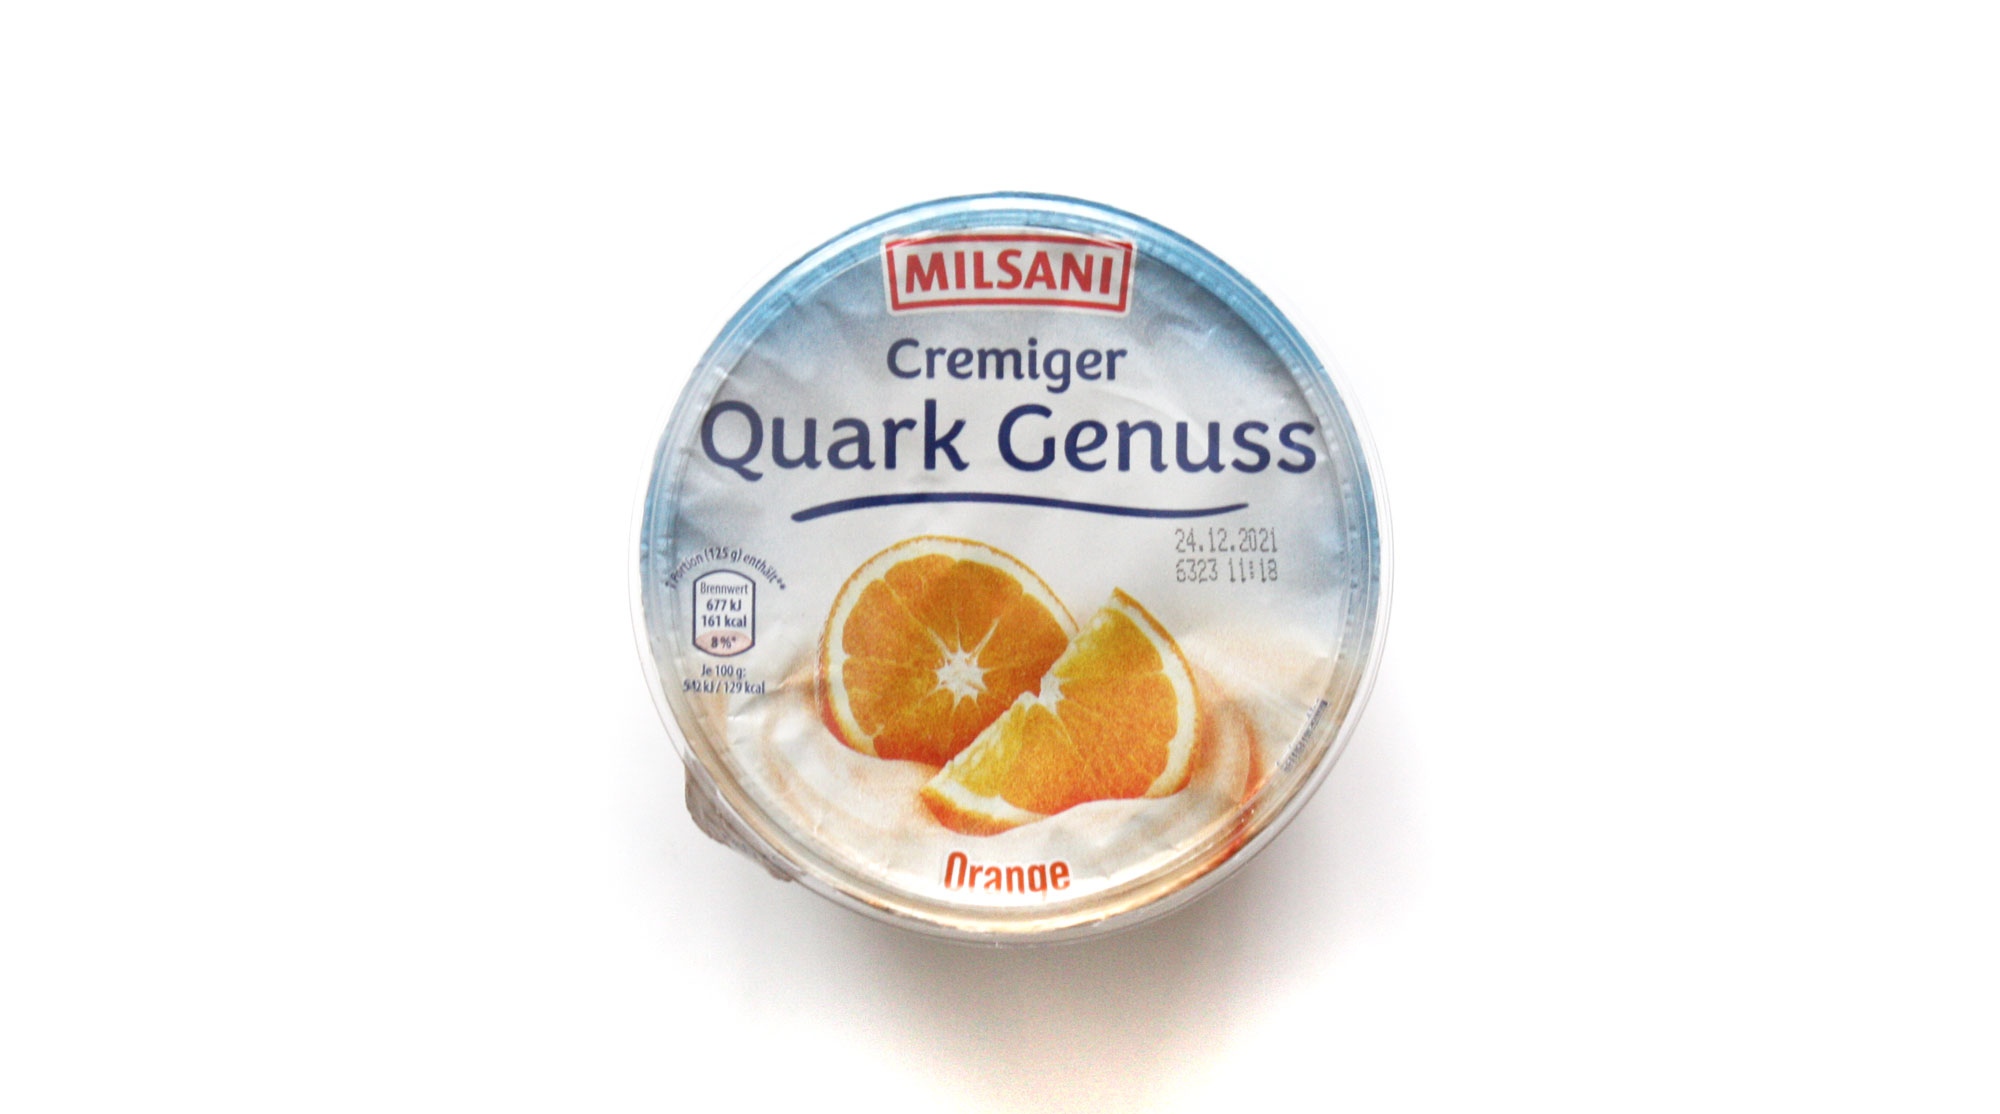 Milsani Cremiger Quark Genuss | Lebensmittelklarheit